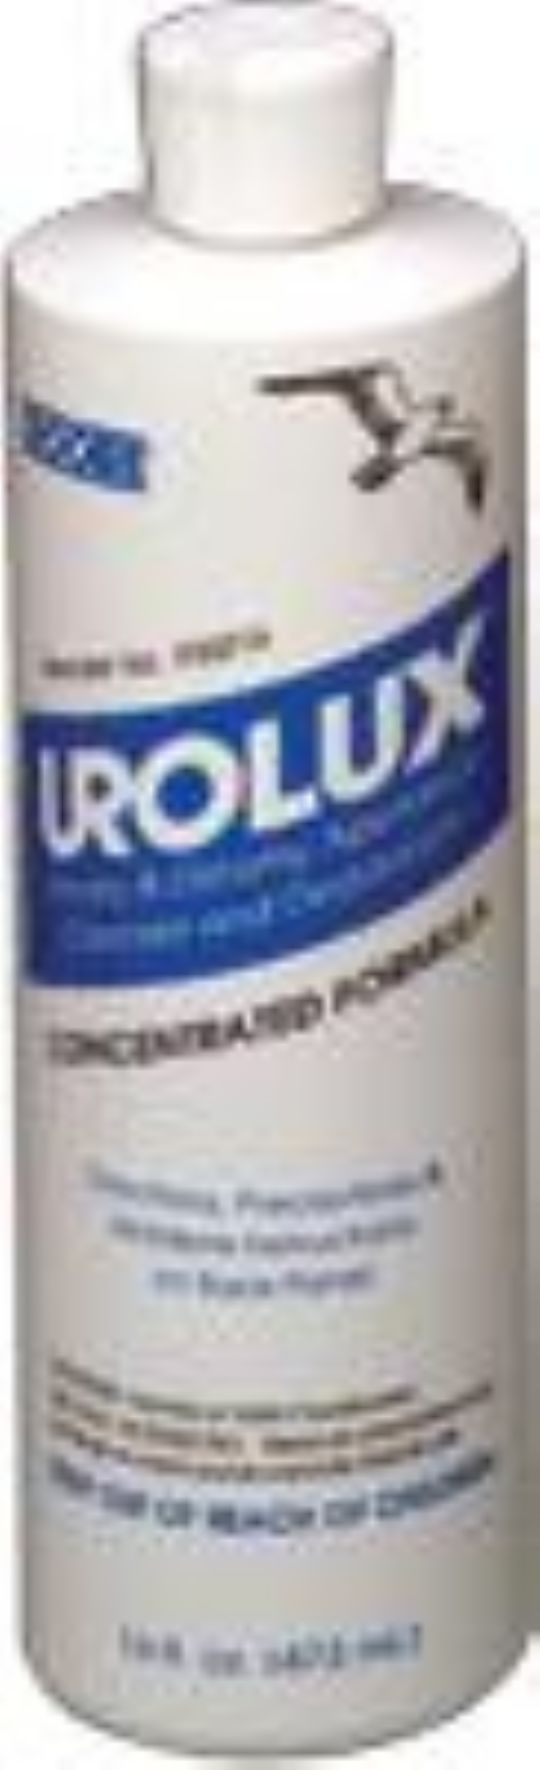 Urolux Appliance Cleaner